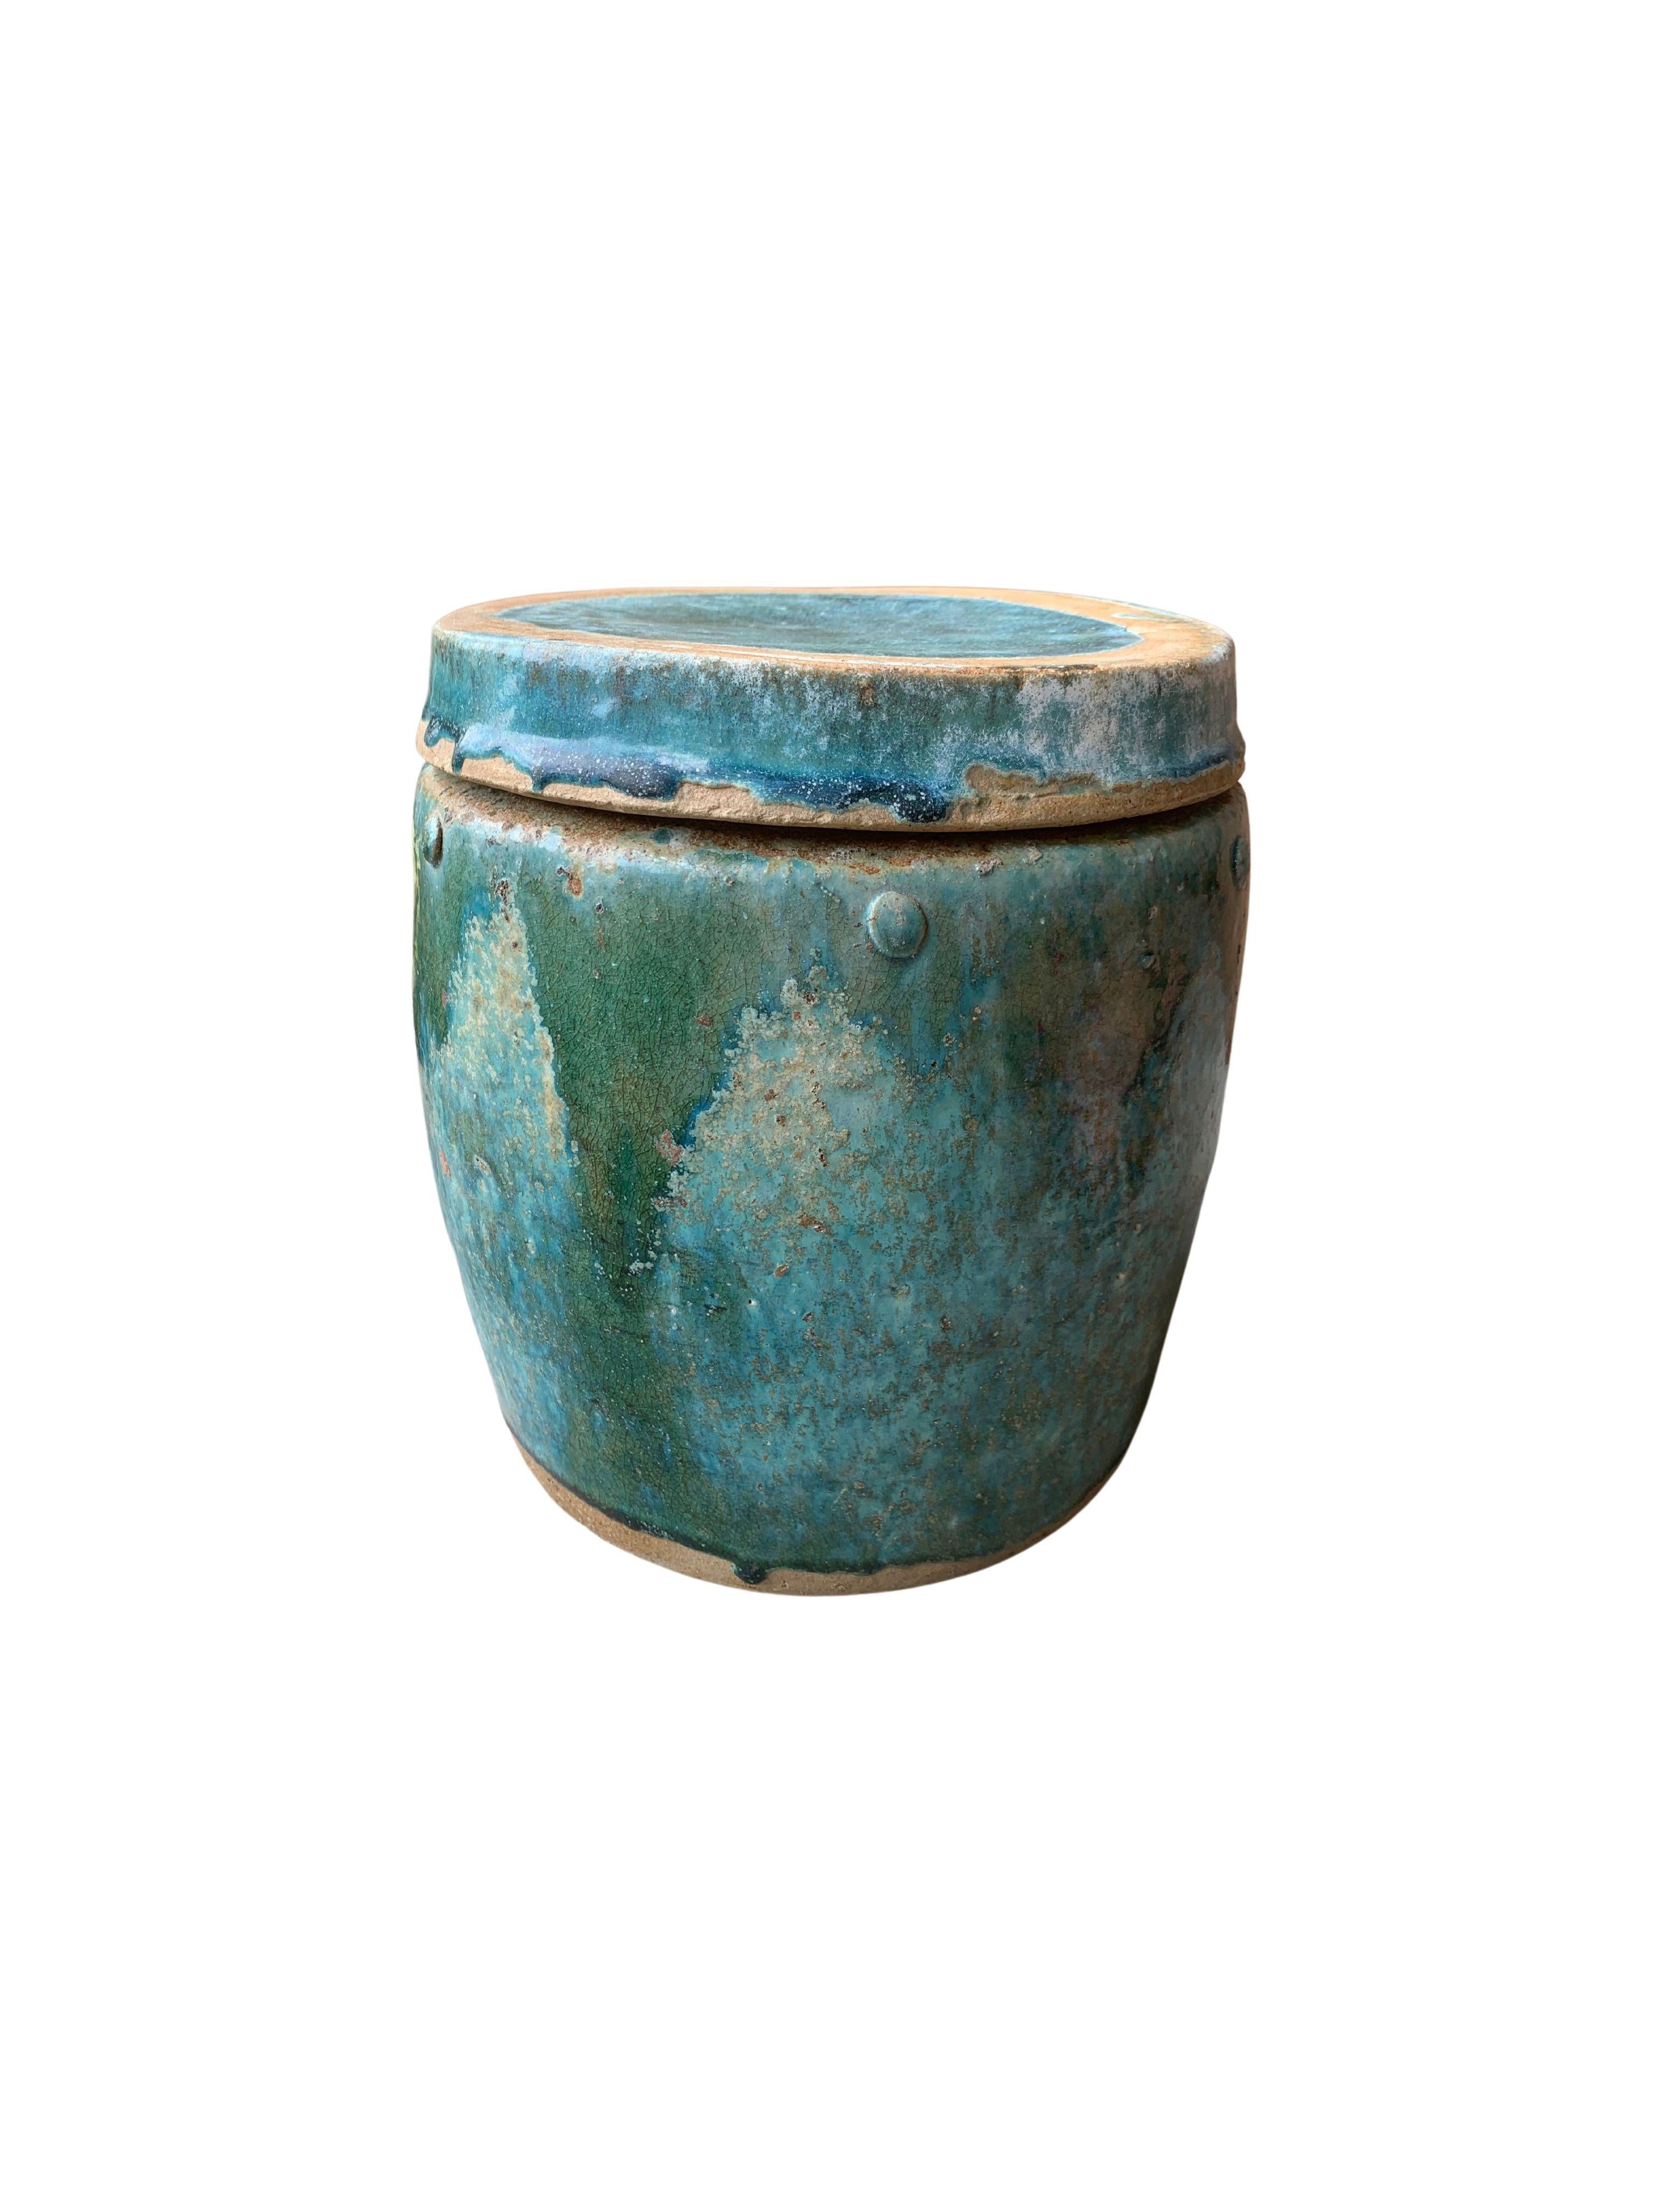 20th Century Chinese Shiwan Green Glazed Ceramic Jar / Planter, c. 1900 For Sale